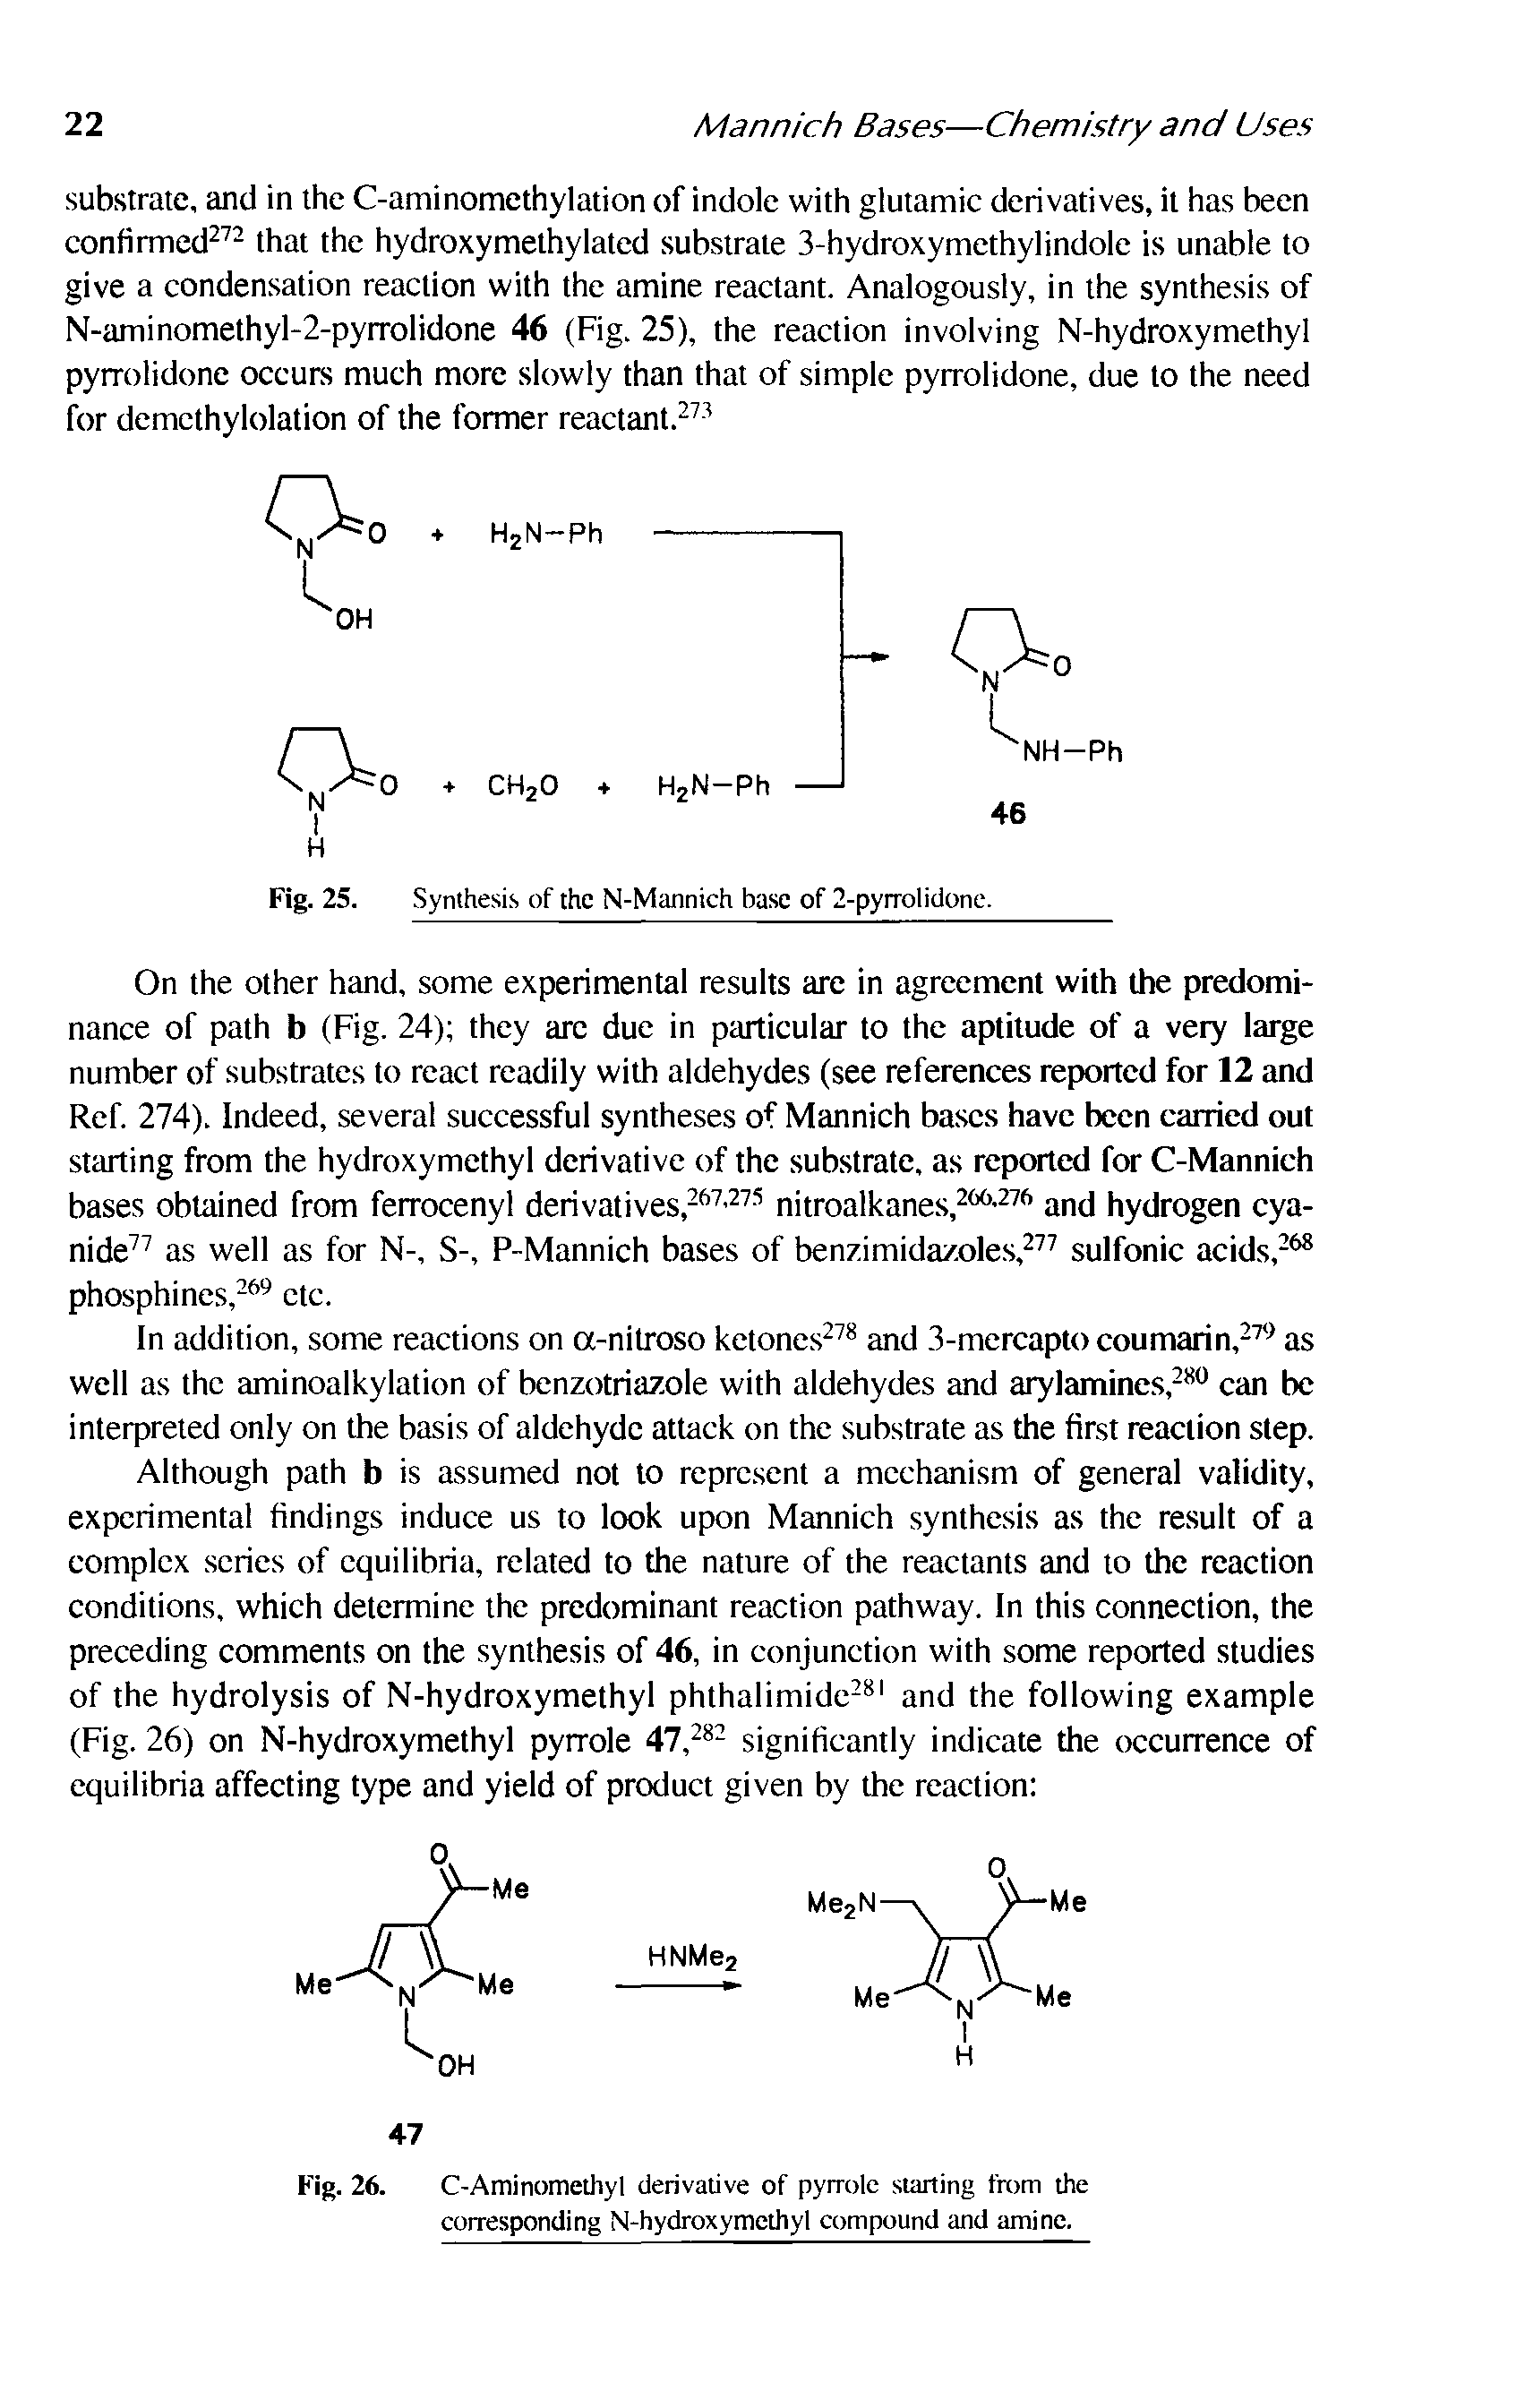 Fig. 26. C-Aminomethyl derivative of pyrrole starting trom the eorresponding N-hydroxymethyl compound and amine.